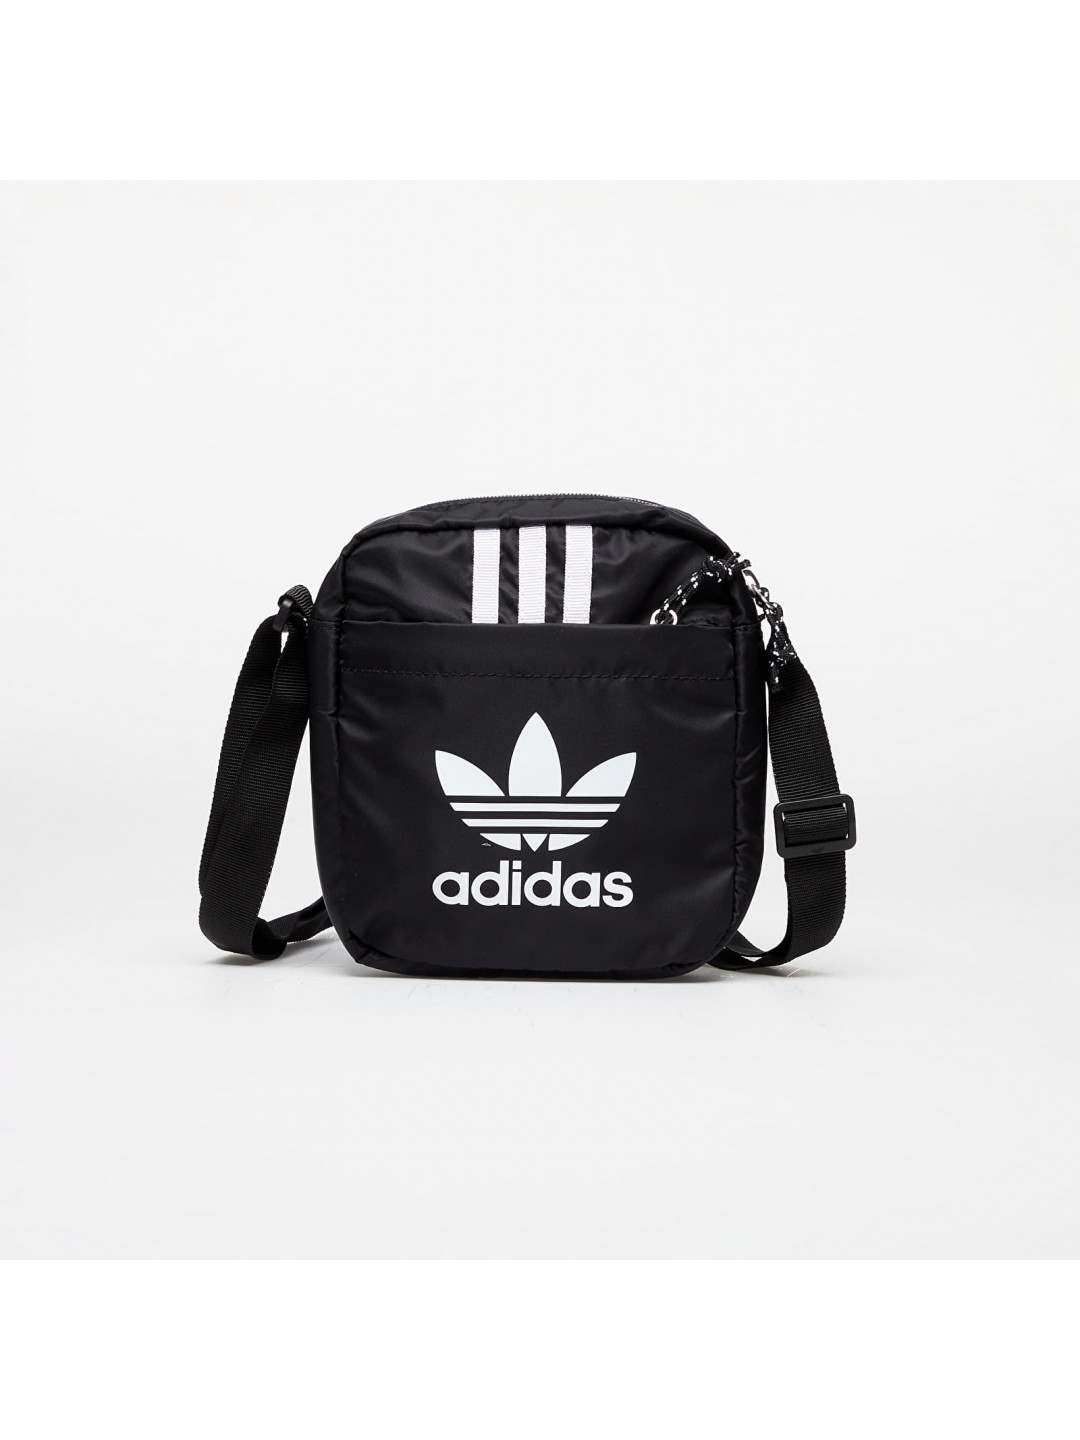 Adidas Adicolor Archive Festival Bag Black White